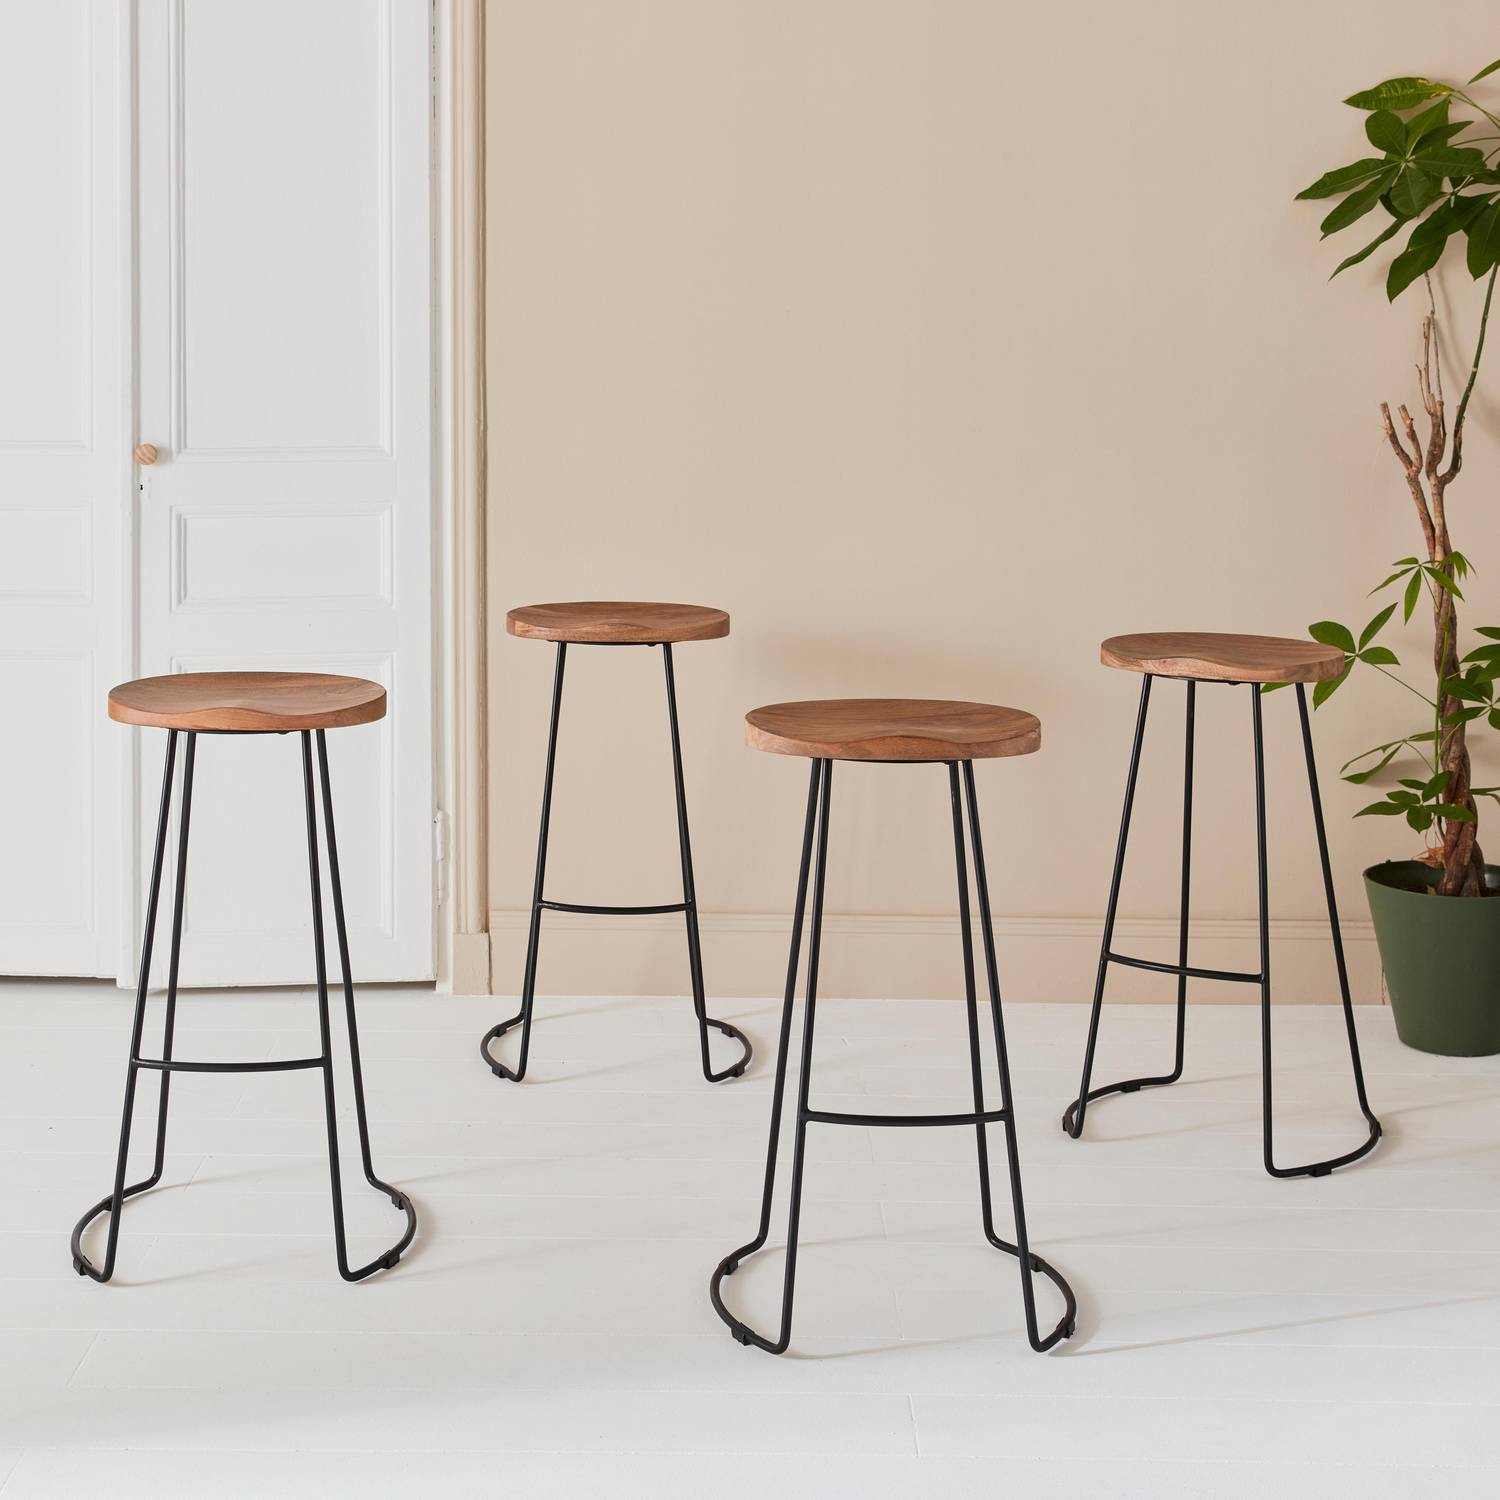 Set of 4 industrial metal and wooden bar stools, 47x40x75cm, Jaya, Mango wood seat, black metal legs Photo1